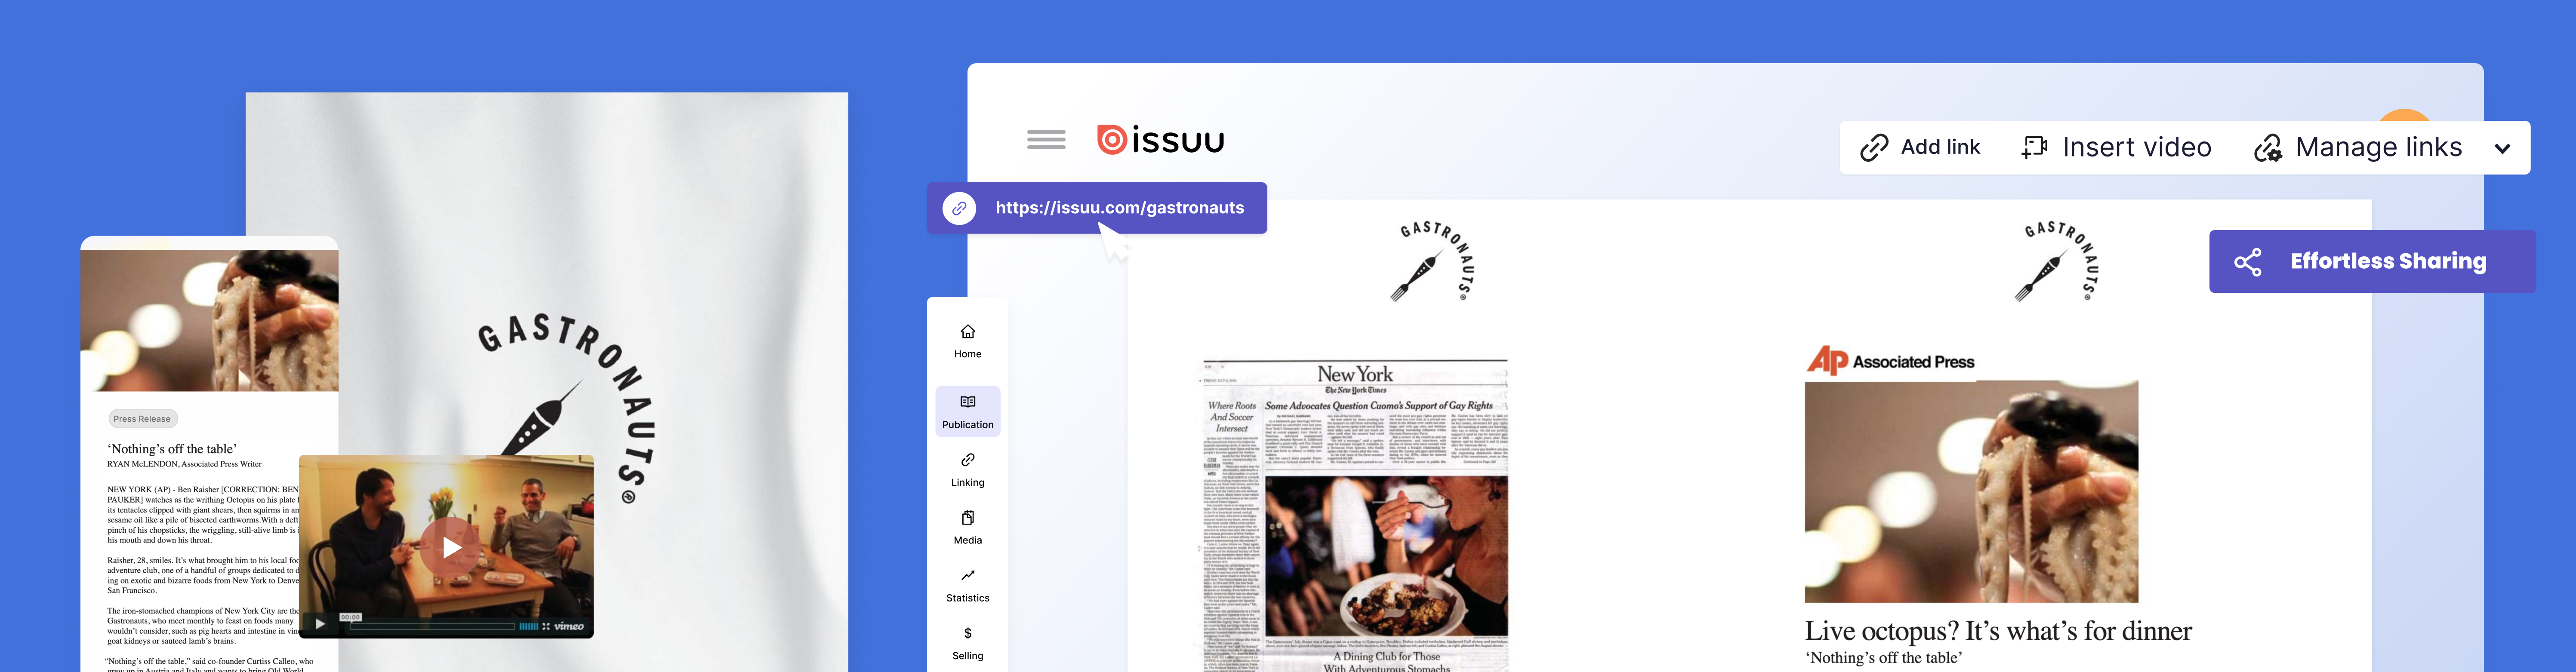 Press release visuals and issuu's platform